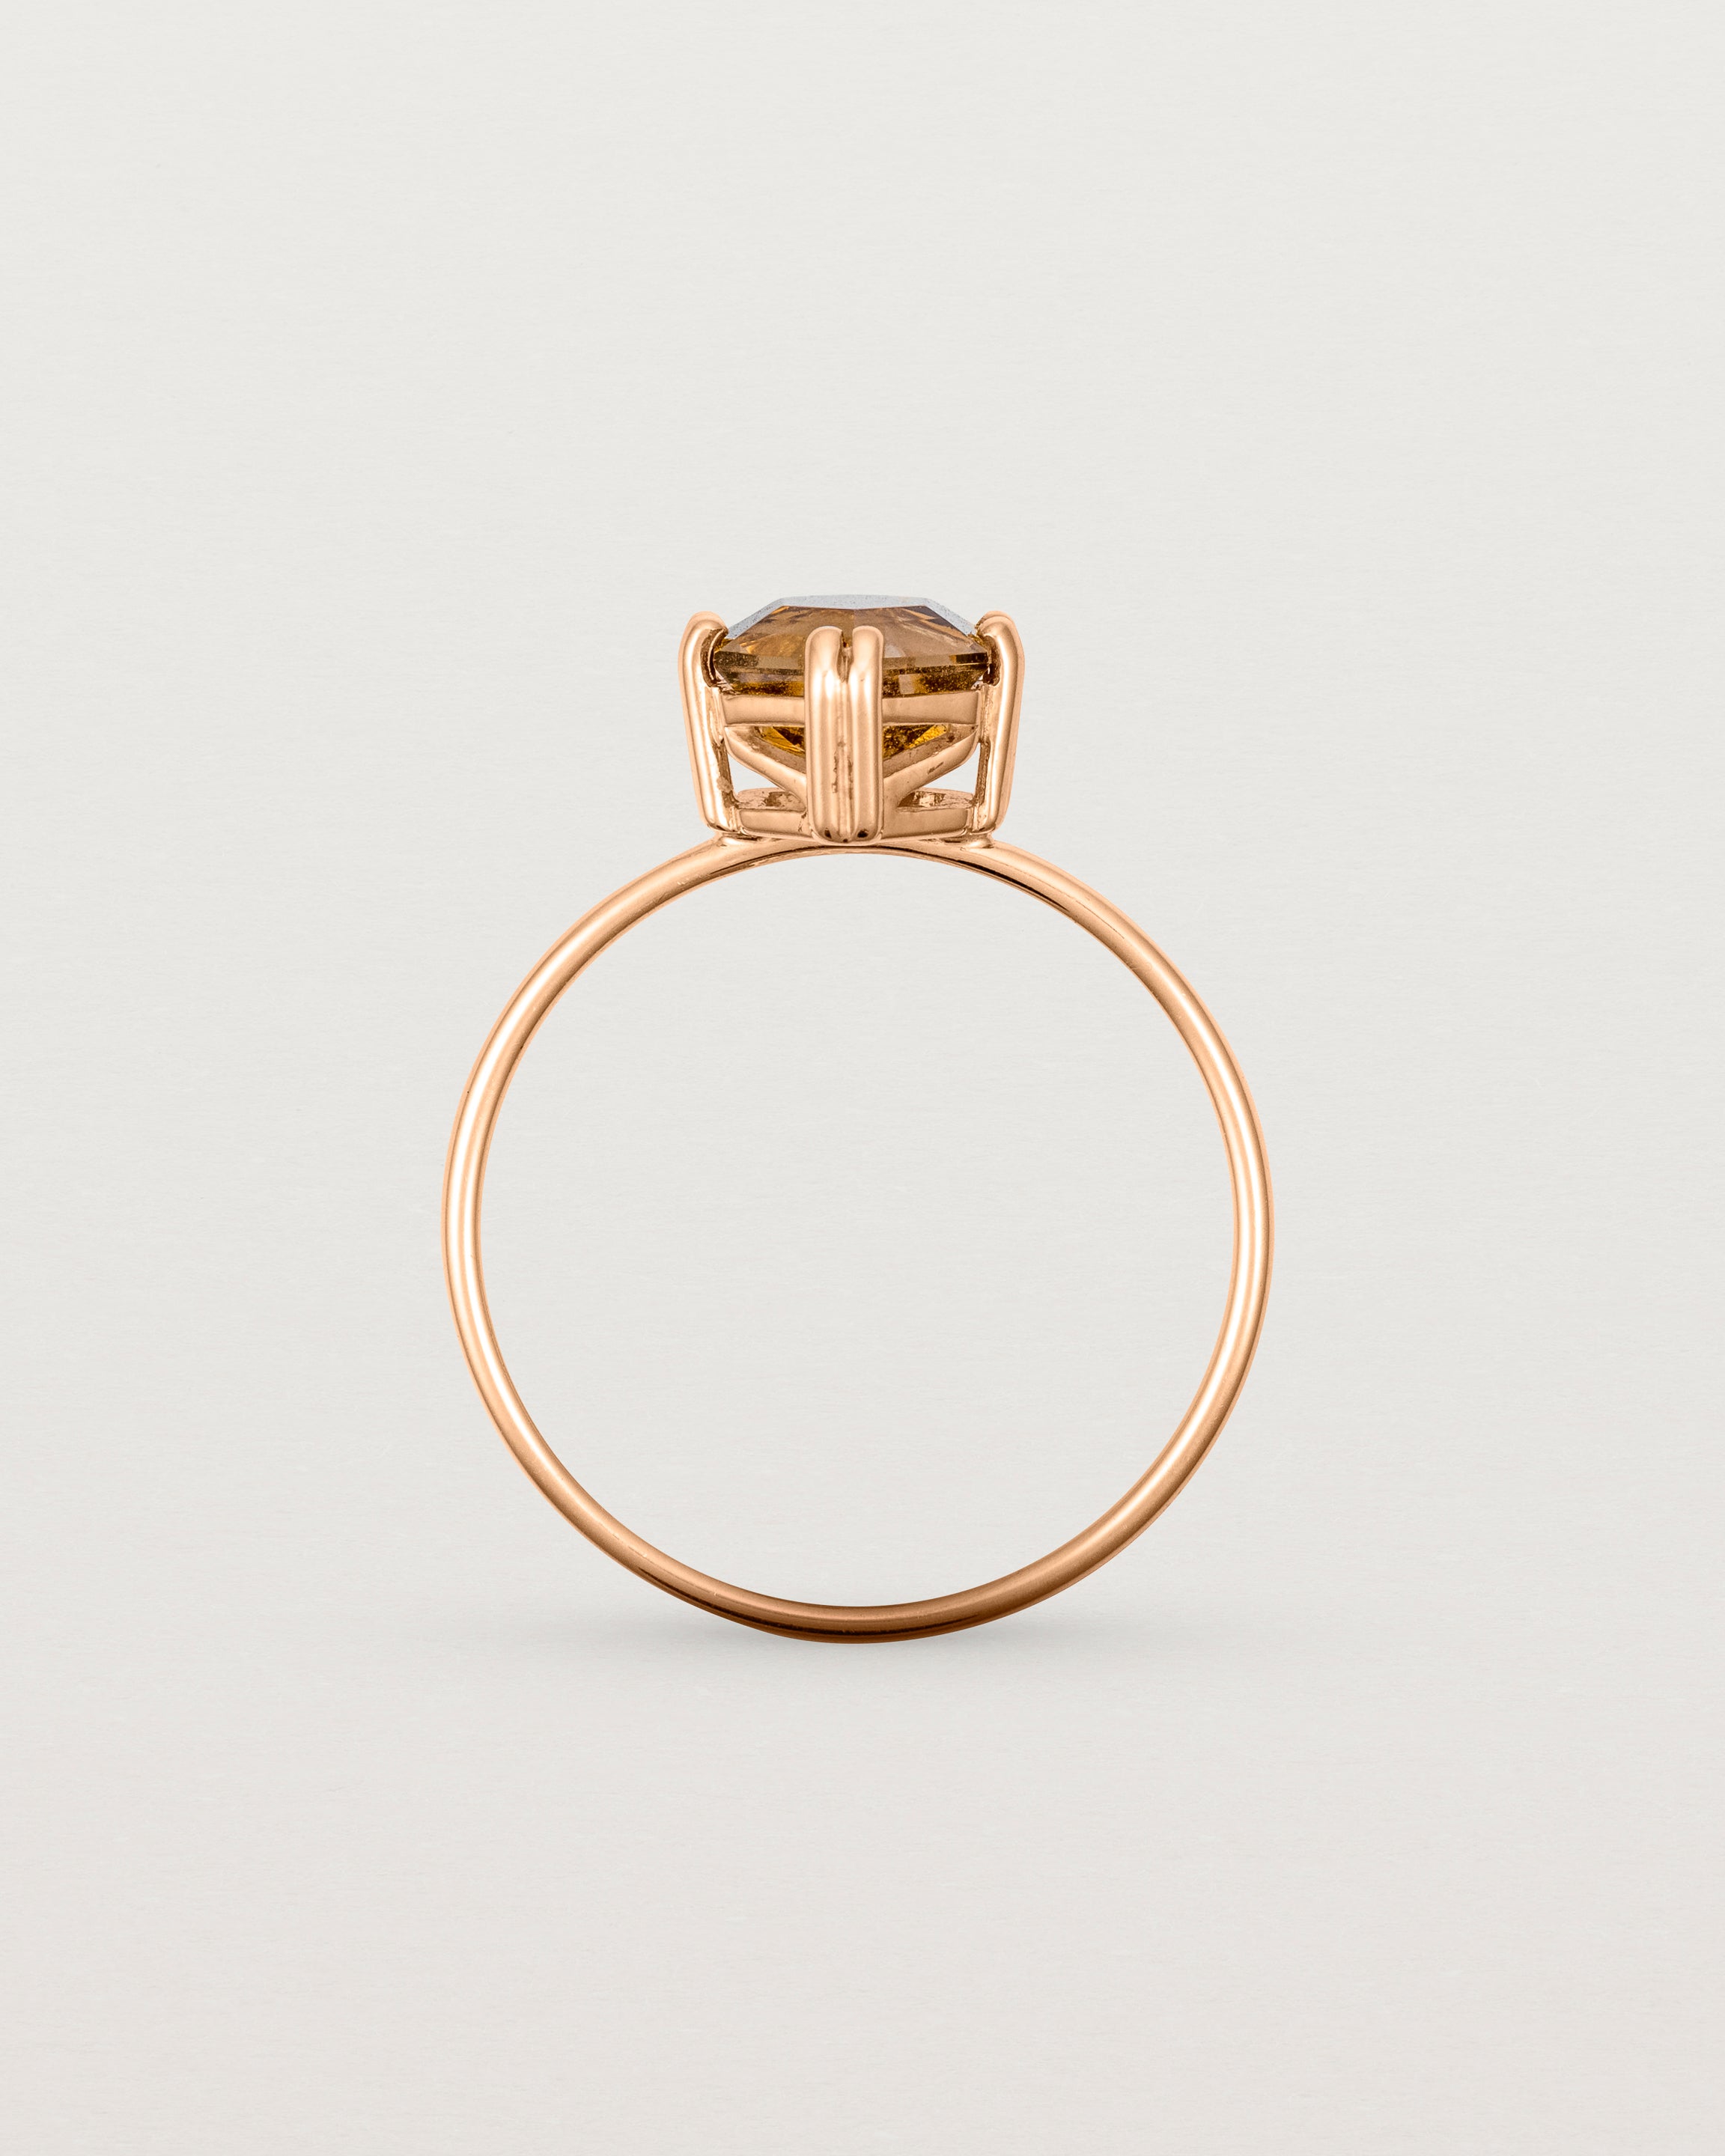 Standing view of the Hexagon Ring | Smokey Quartz in Rose Gold.